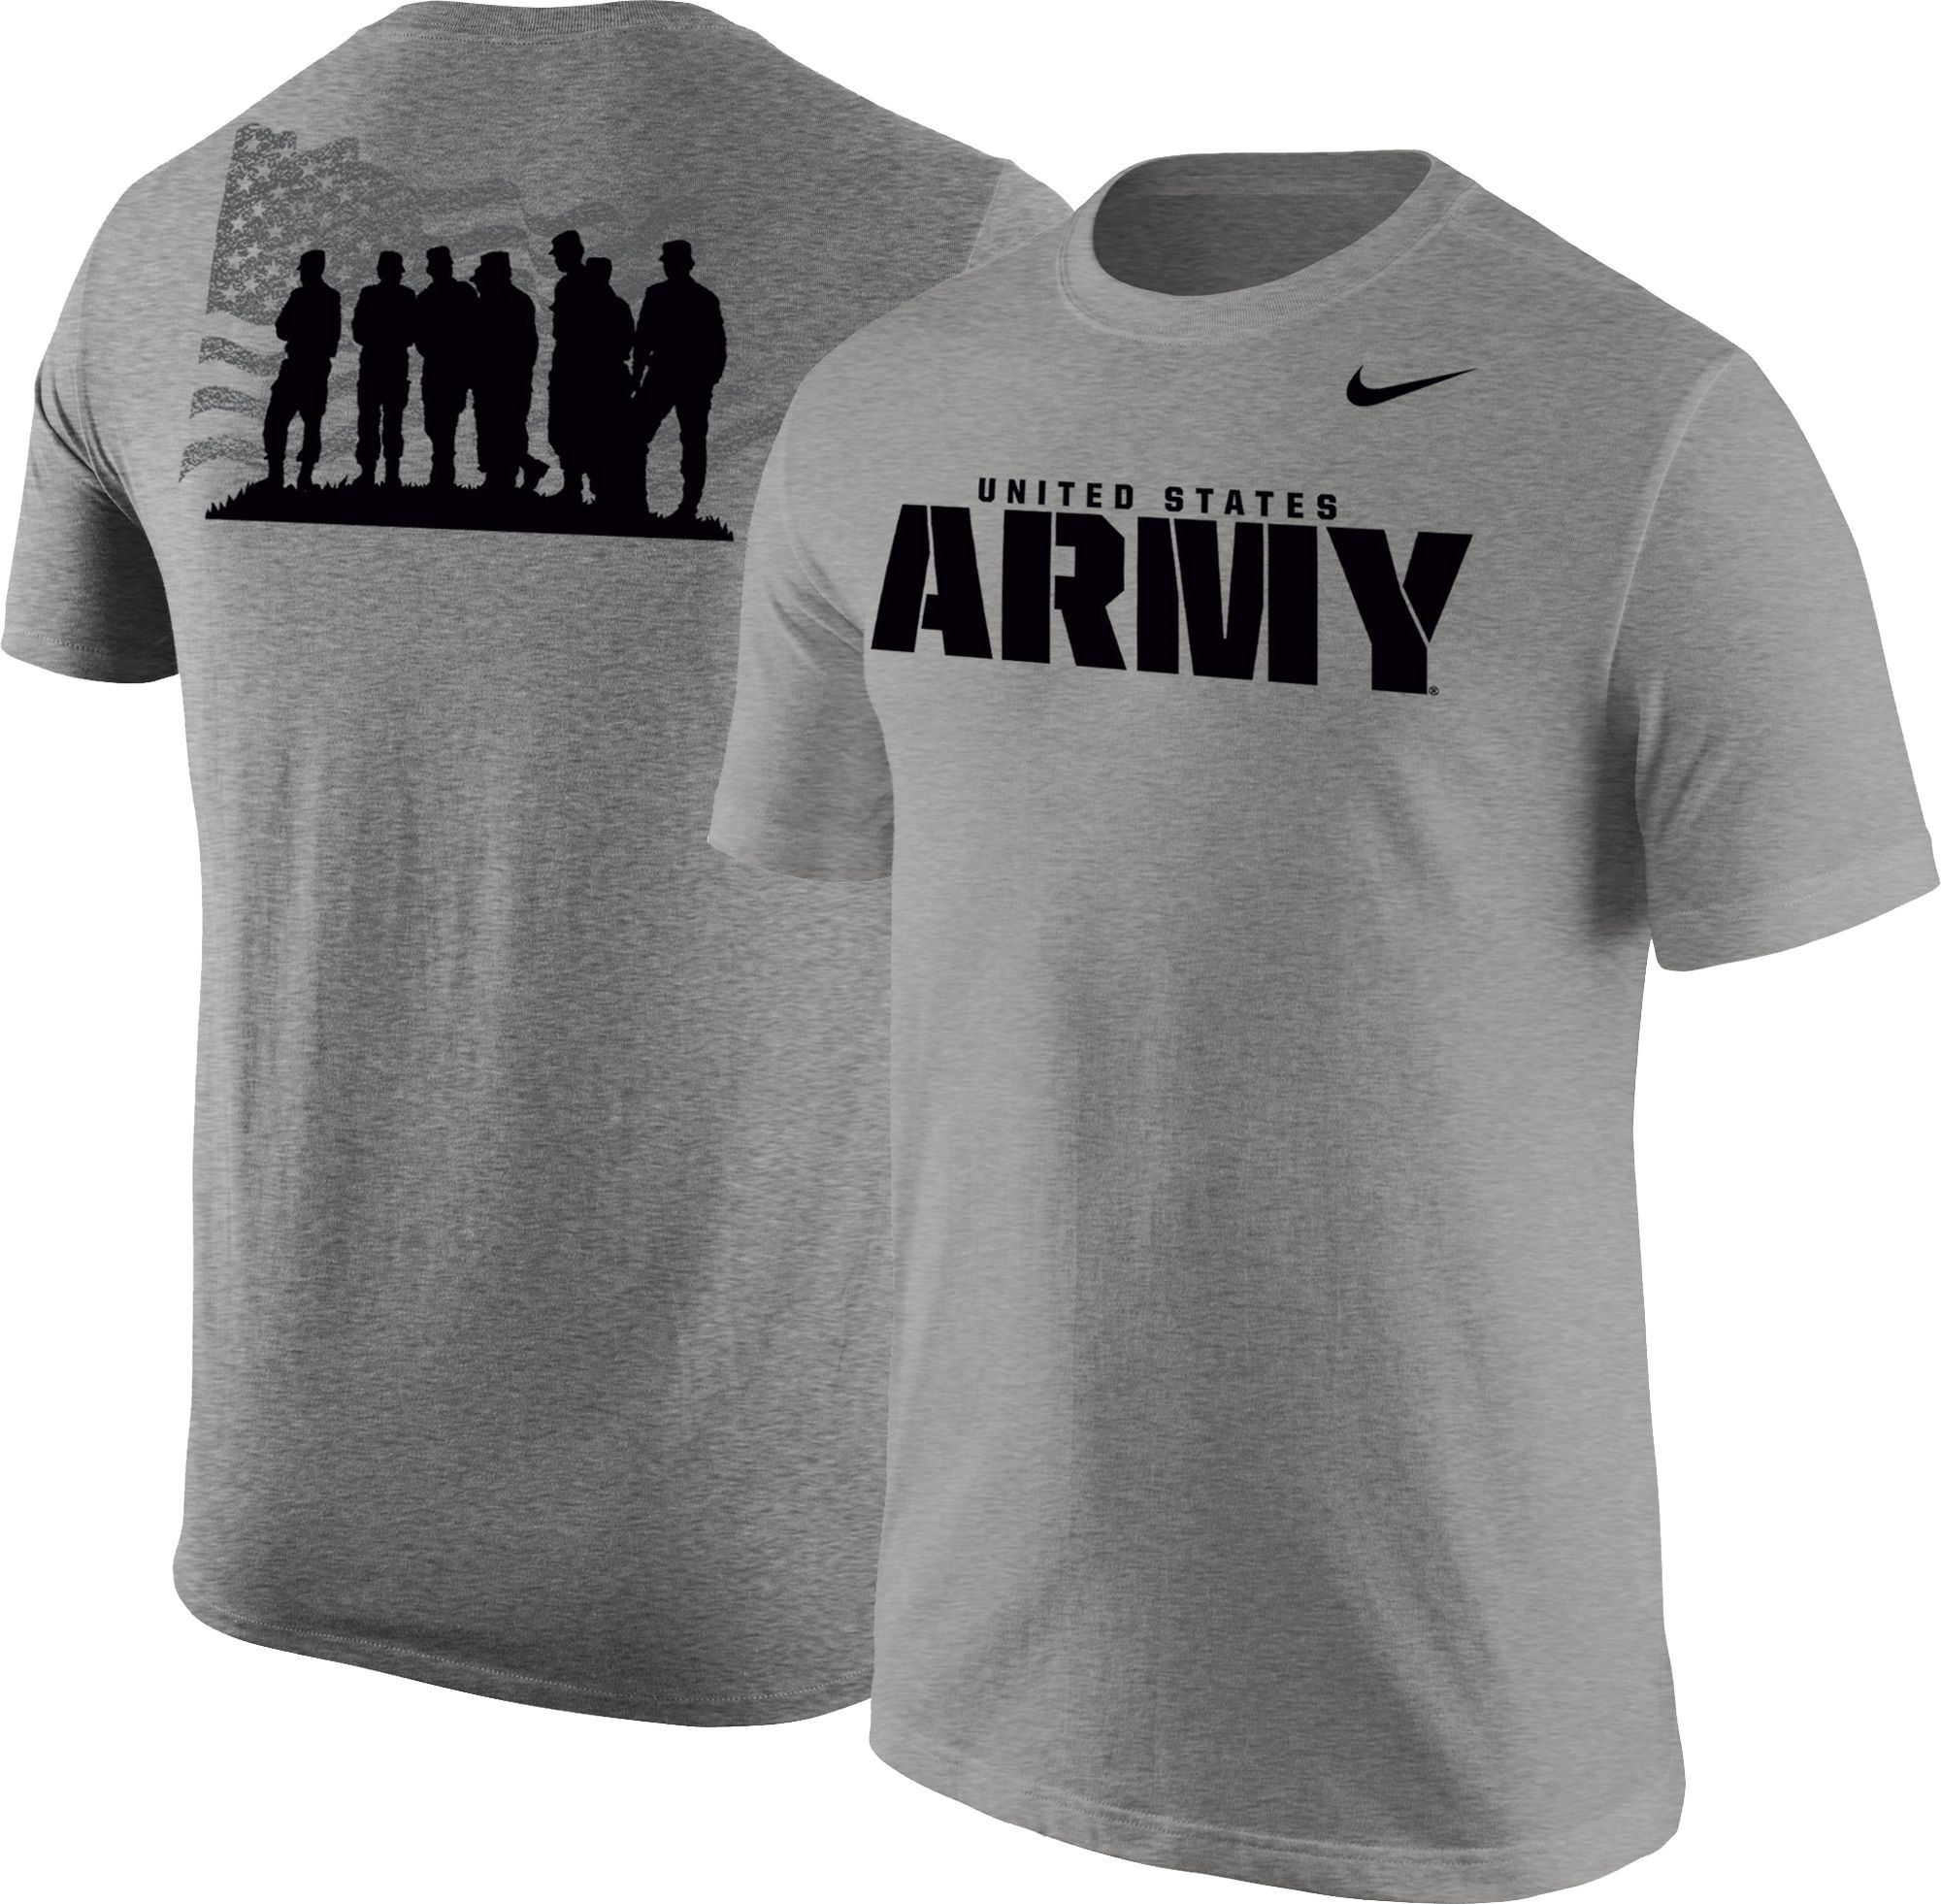 nike army shirt